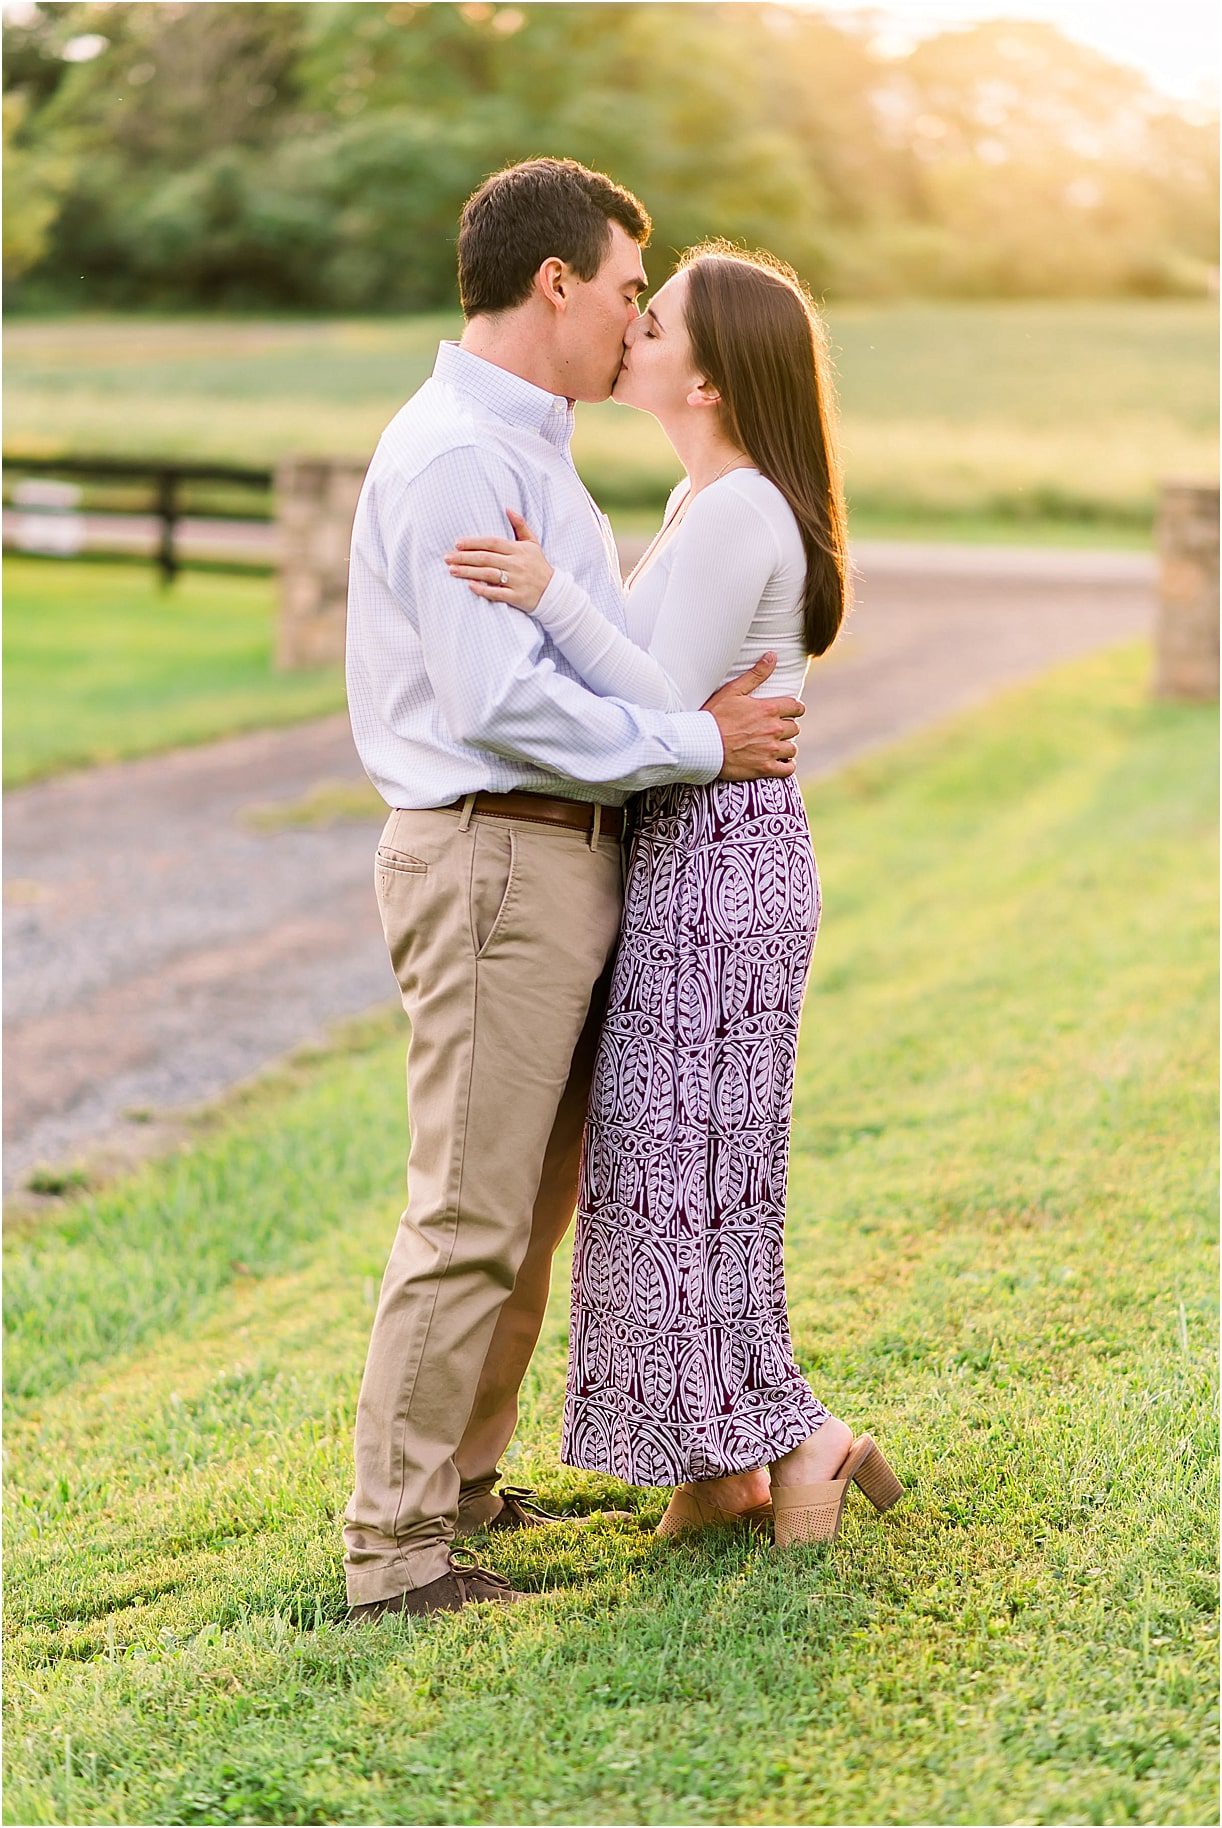 Rural Rustic Farm Engagement Session | Hill City Bride Virginia Wedding Blog